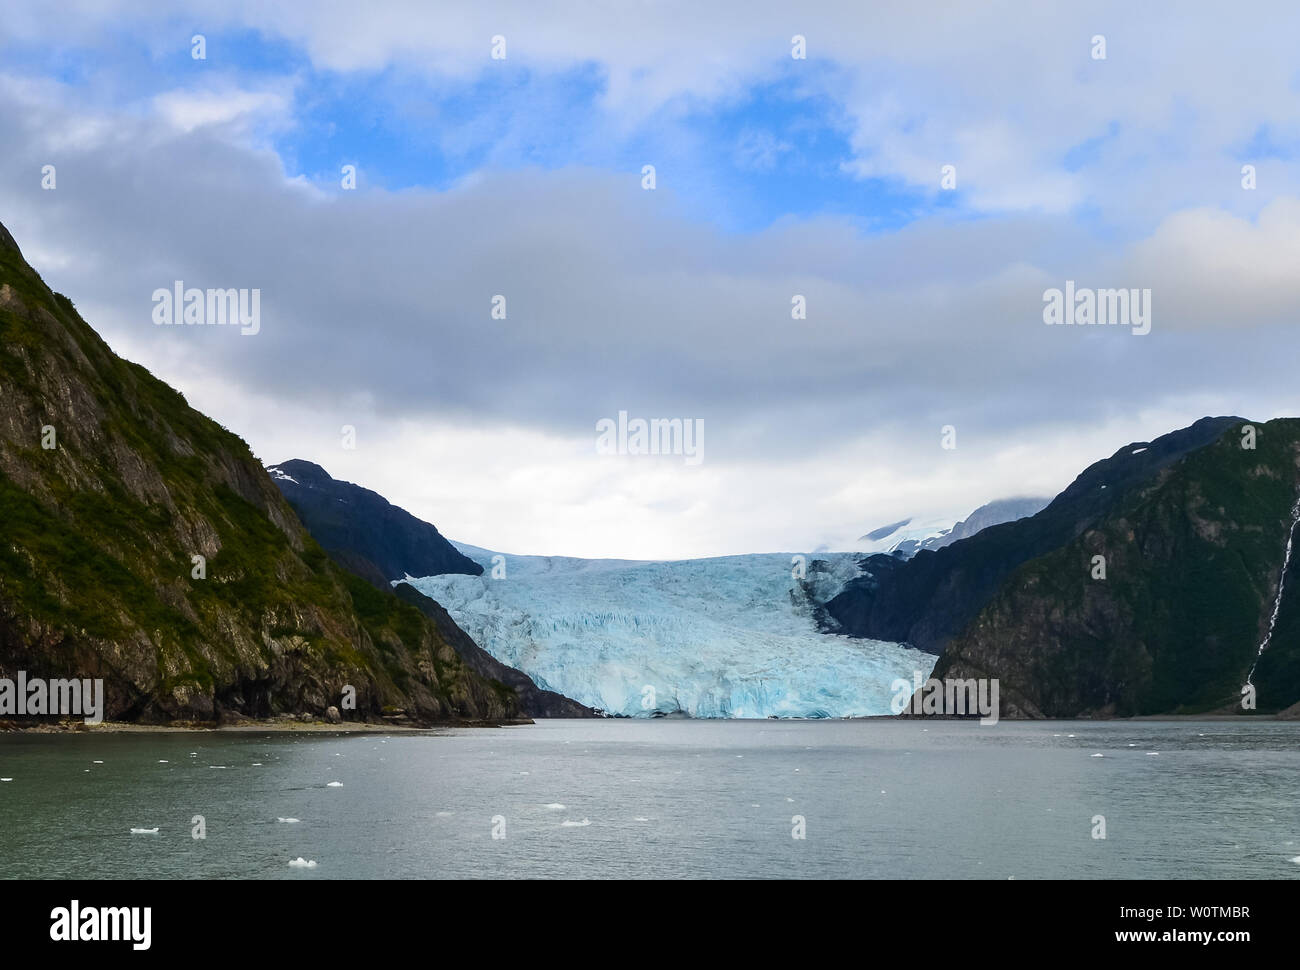 Distant view of a Holgate glacier in Kenai fjords National Park, Seward, Alaska, United States, North America. Stock Photo